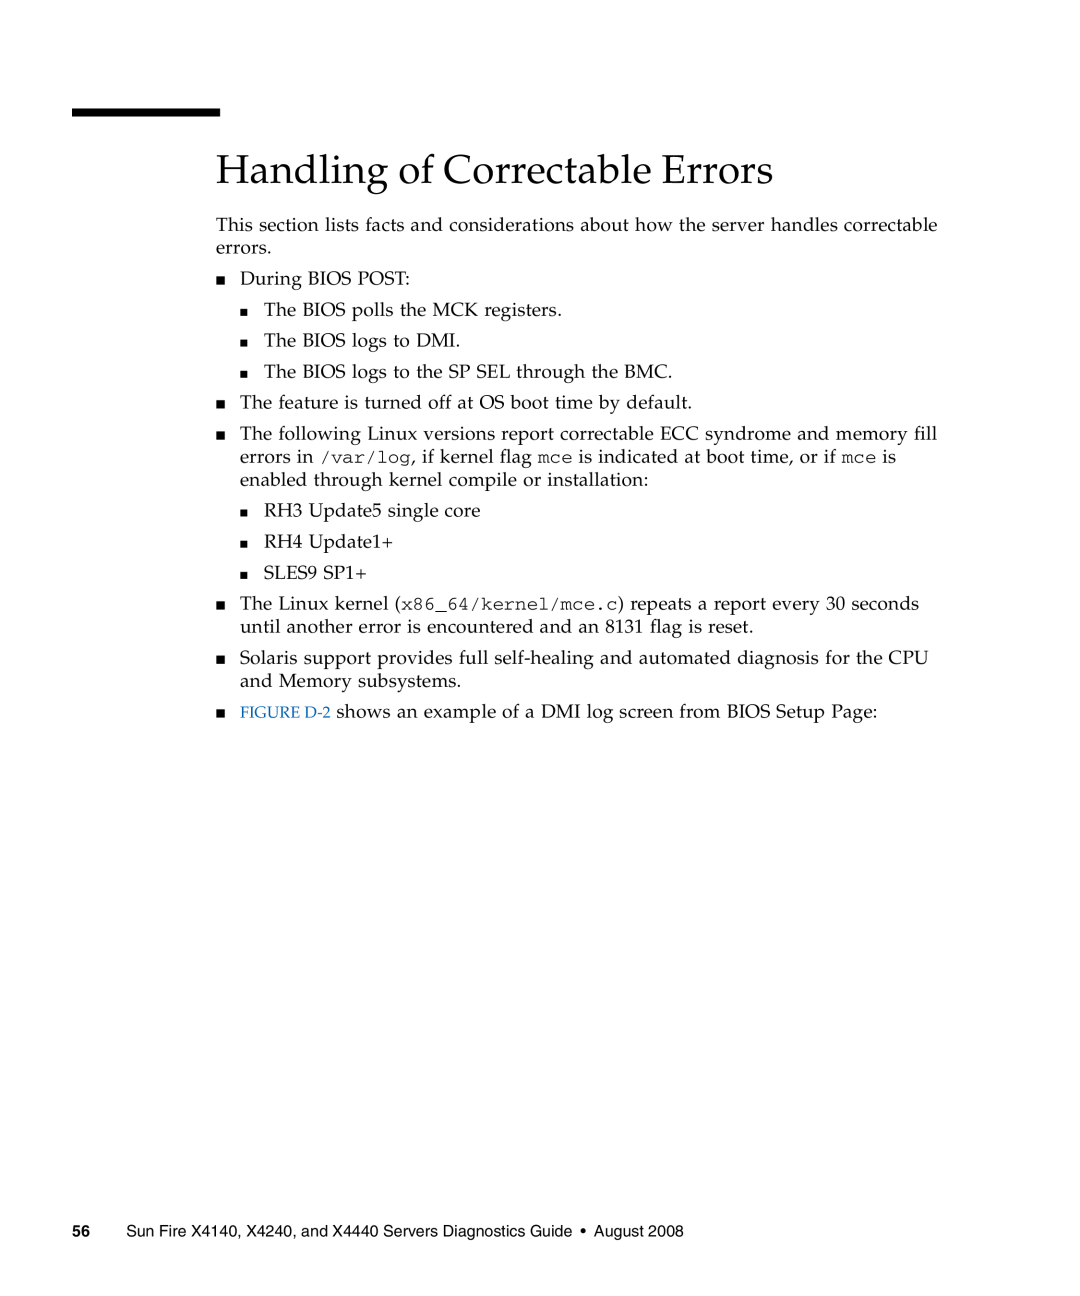 Sun Microsystems X4240, X4440, X4140 manual Handling of Correctable Errors 